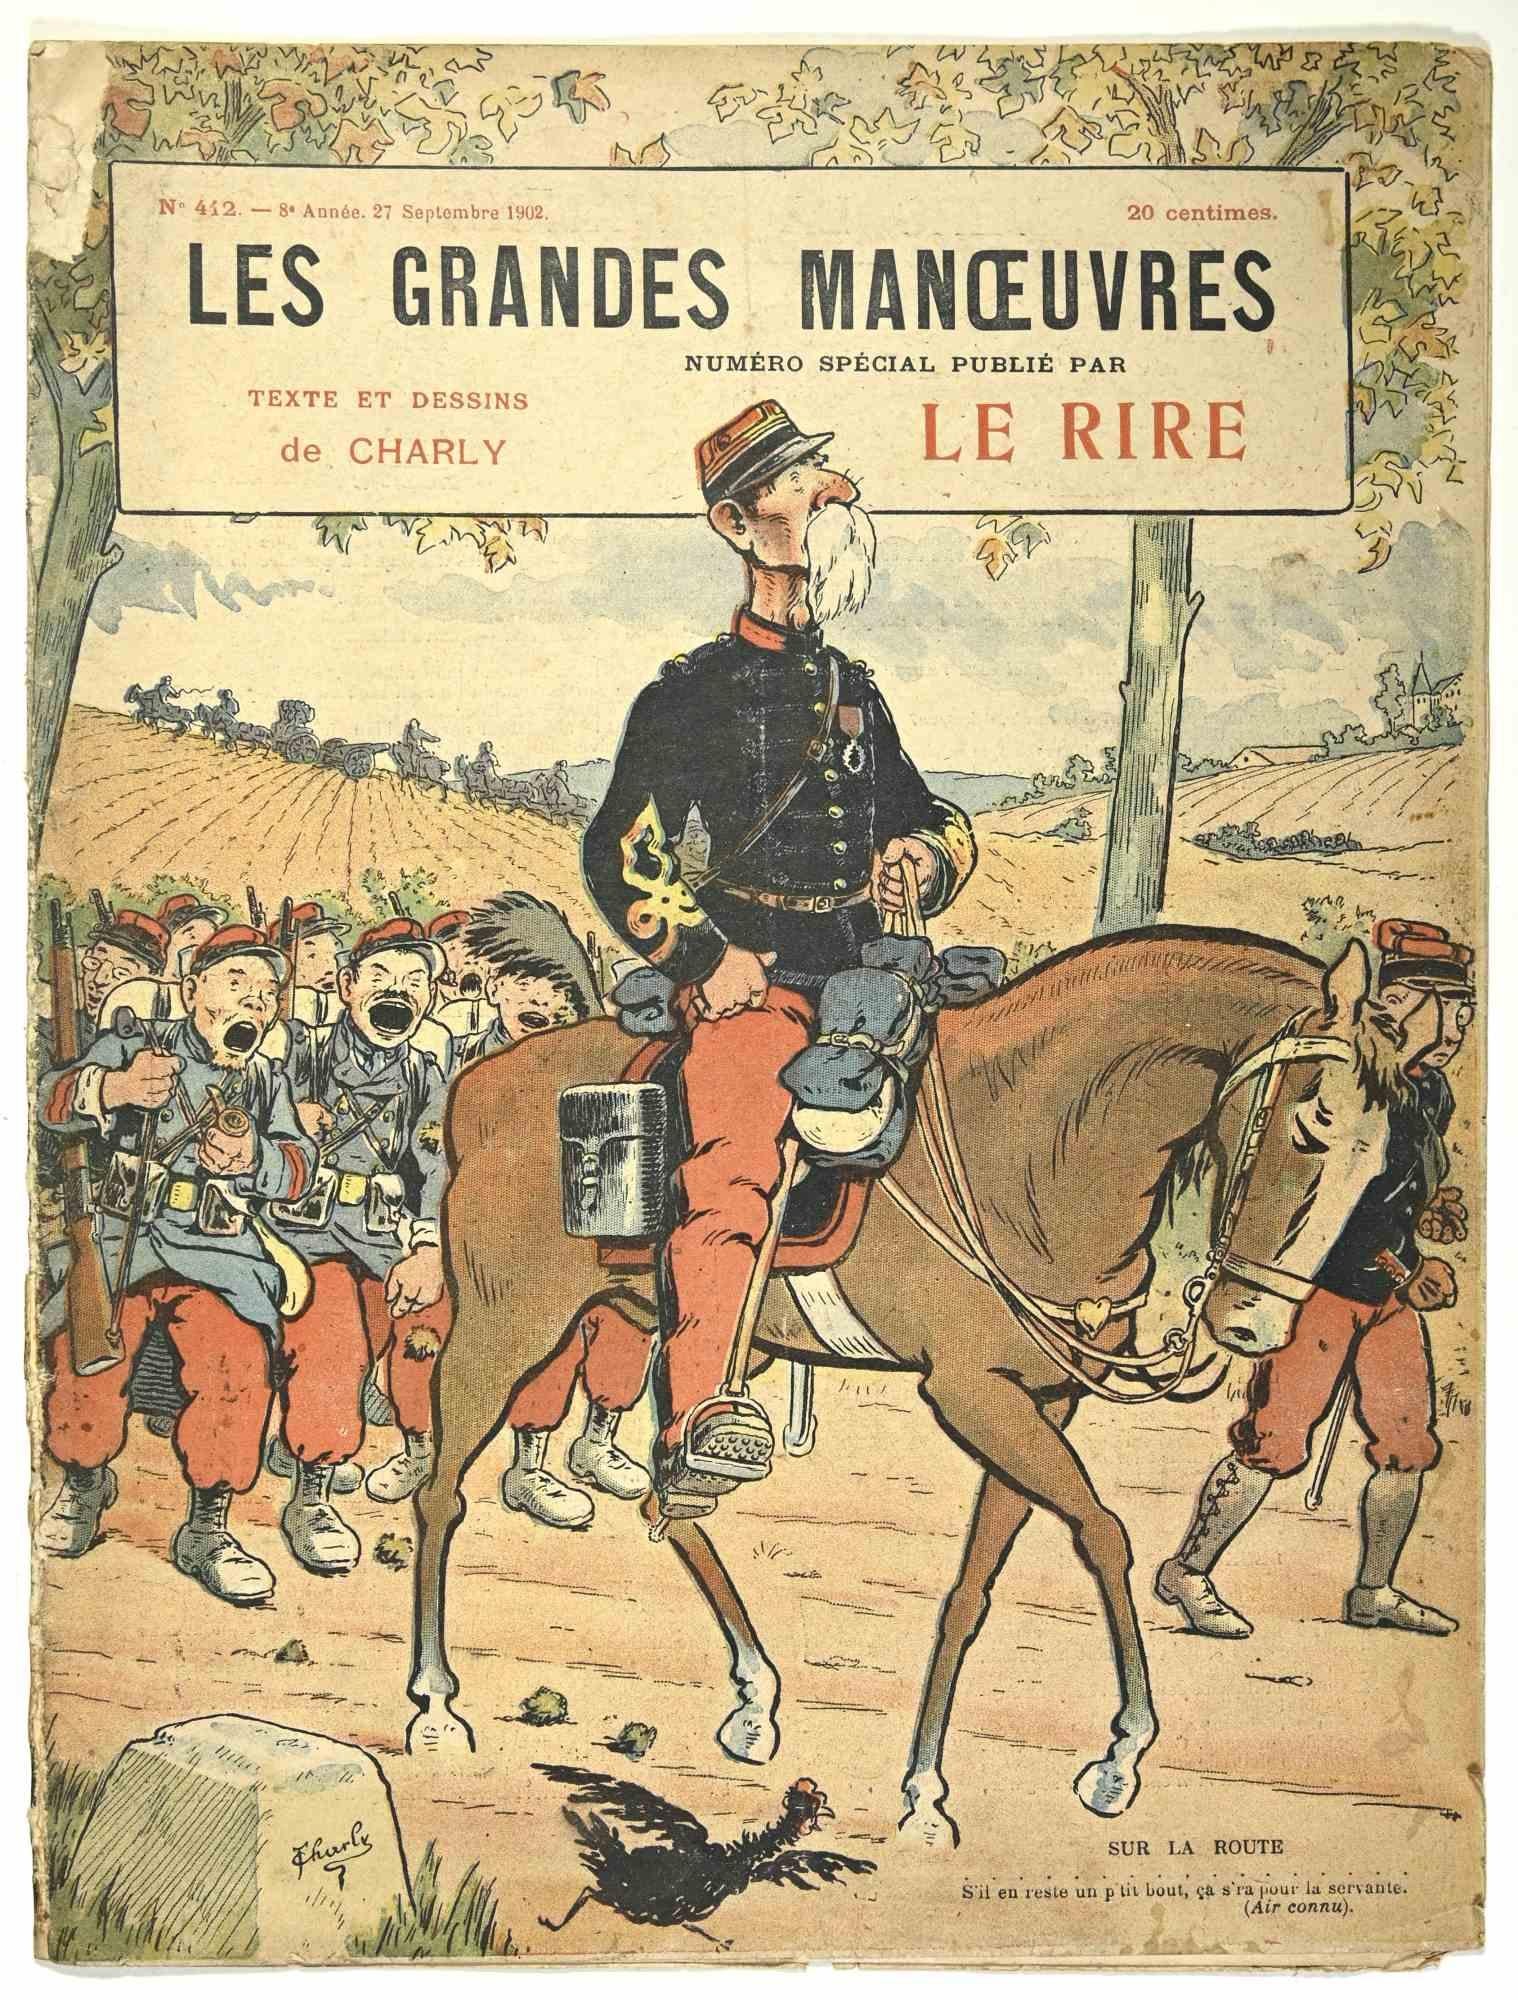 Le Rire  - Les Grandes Manœuvres - alte Comic-Zeitschrift - 1902 – Art von Charly